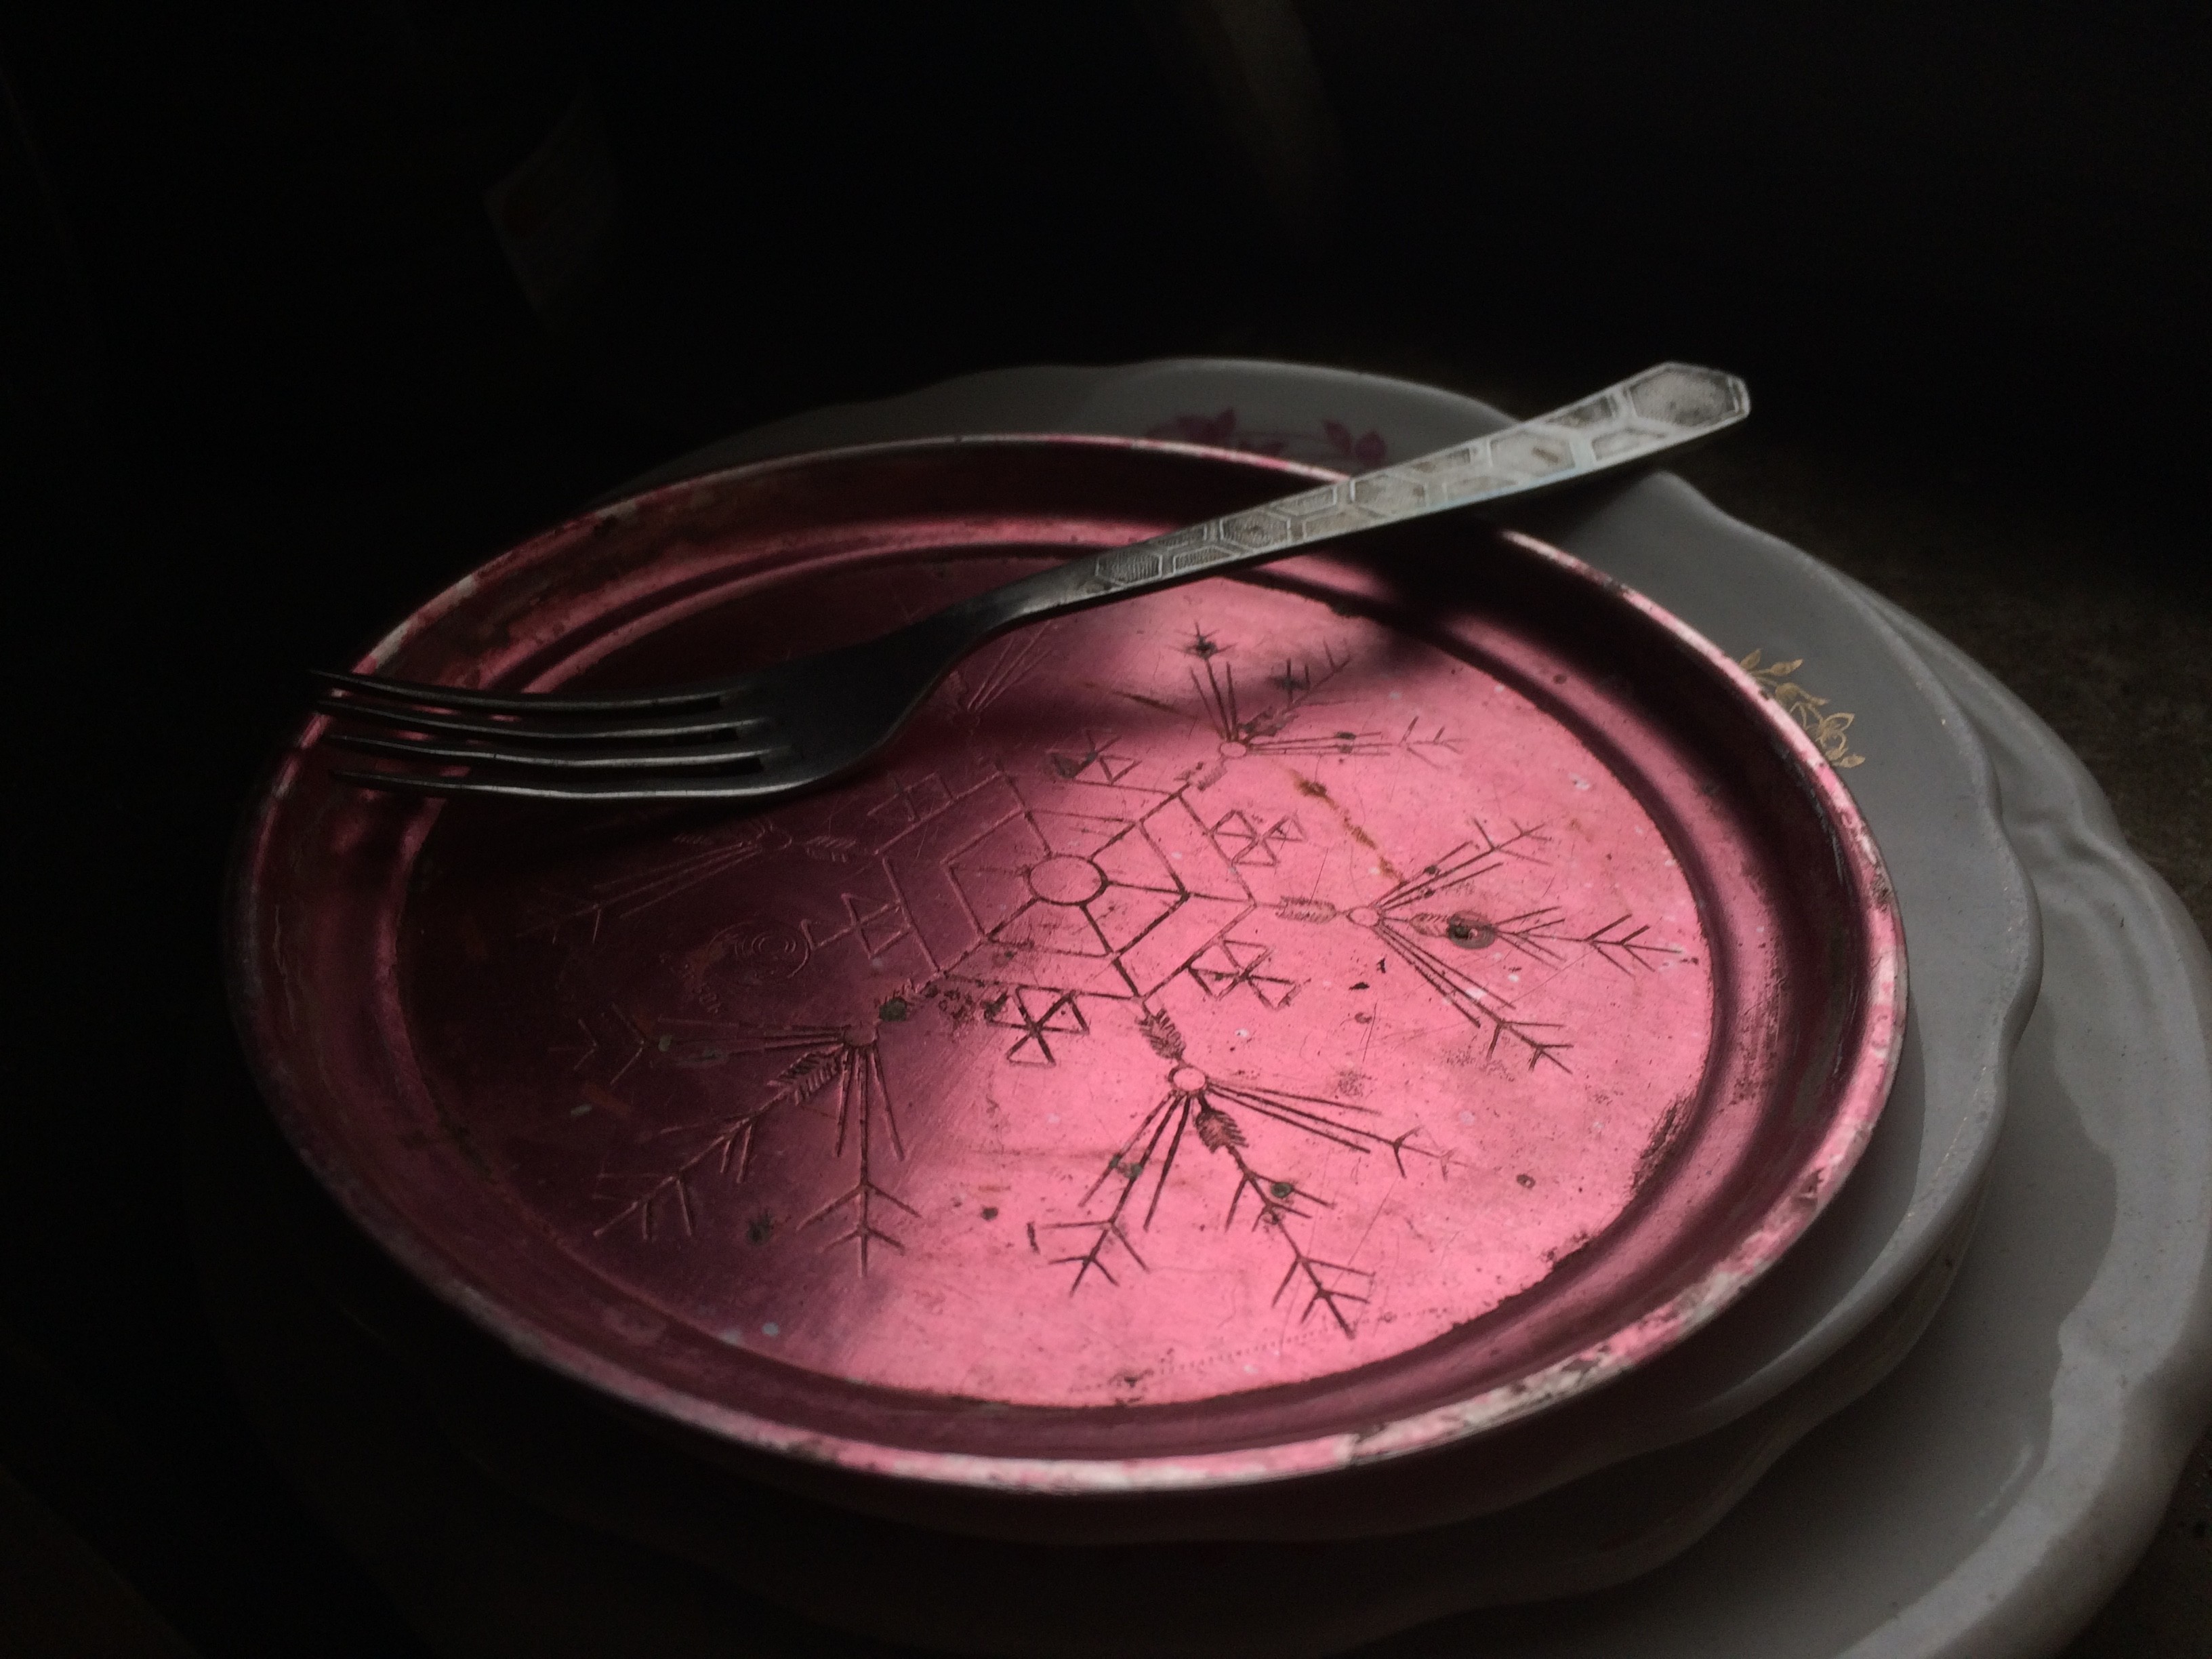 General 3264x2448 fork metal plates pink dark background silverware minimalism closeup